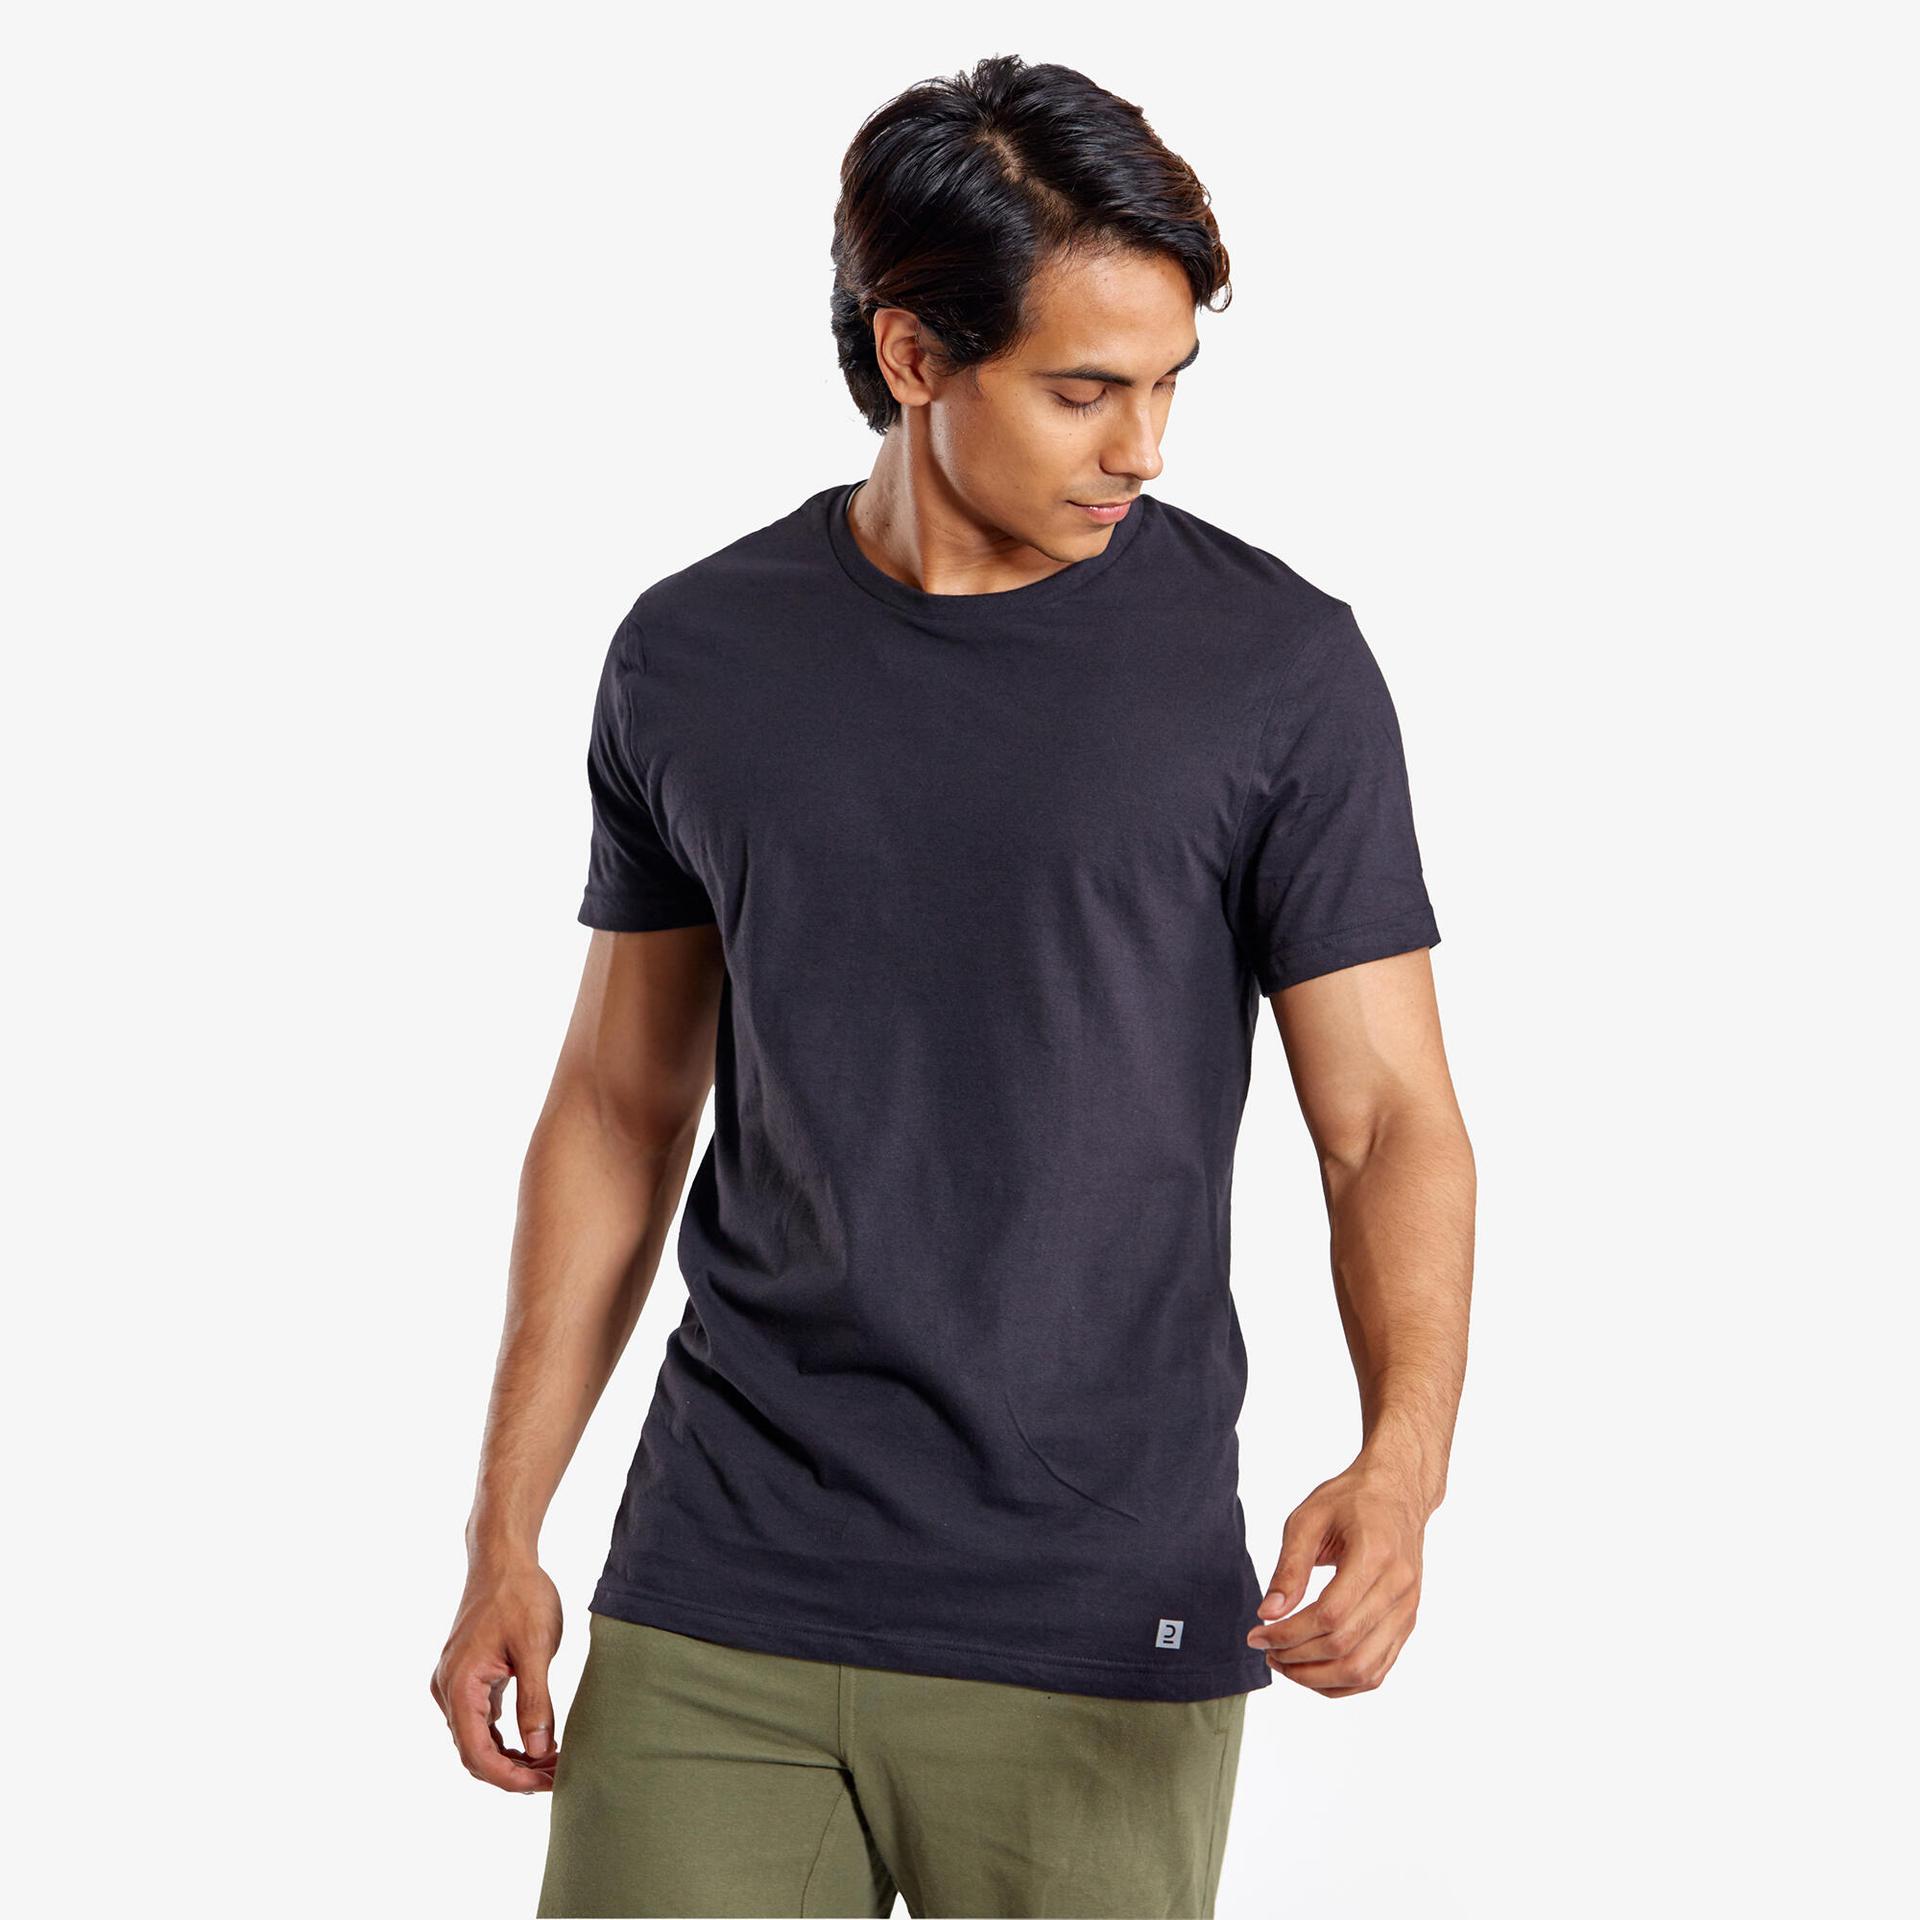 men's-cotton-gym-t-shirt-regular-fit-sportee-100---black